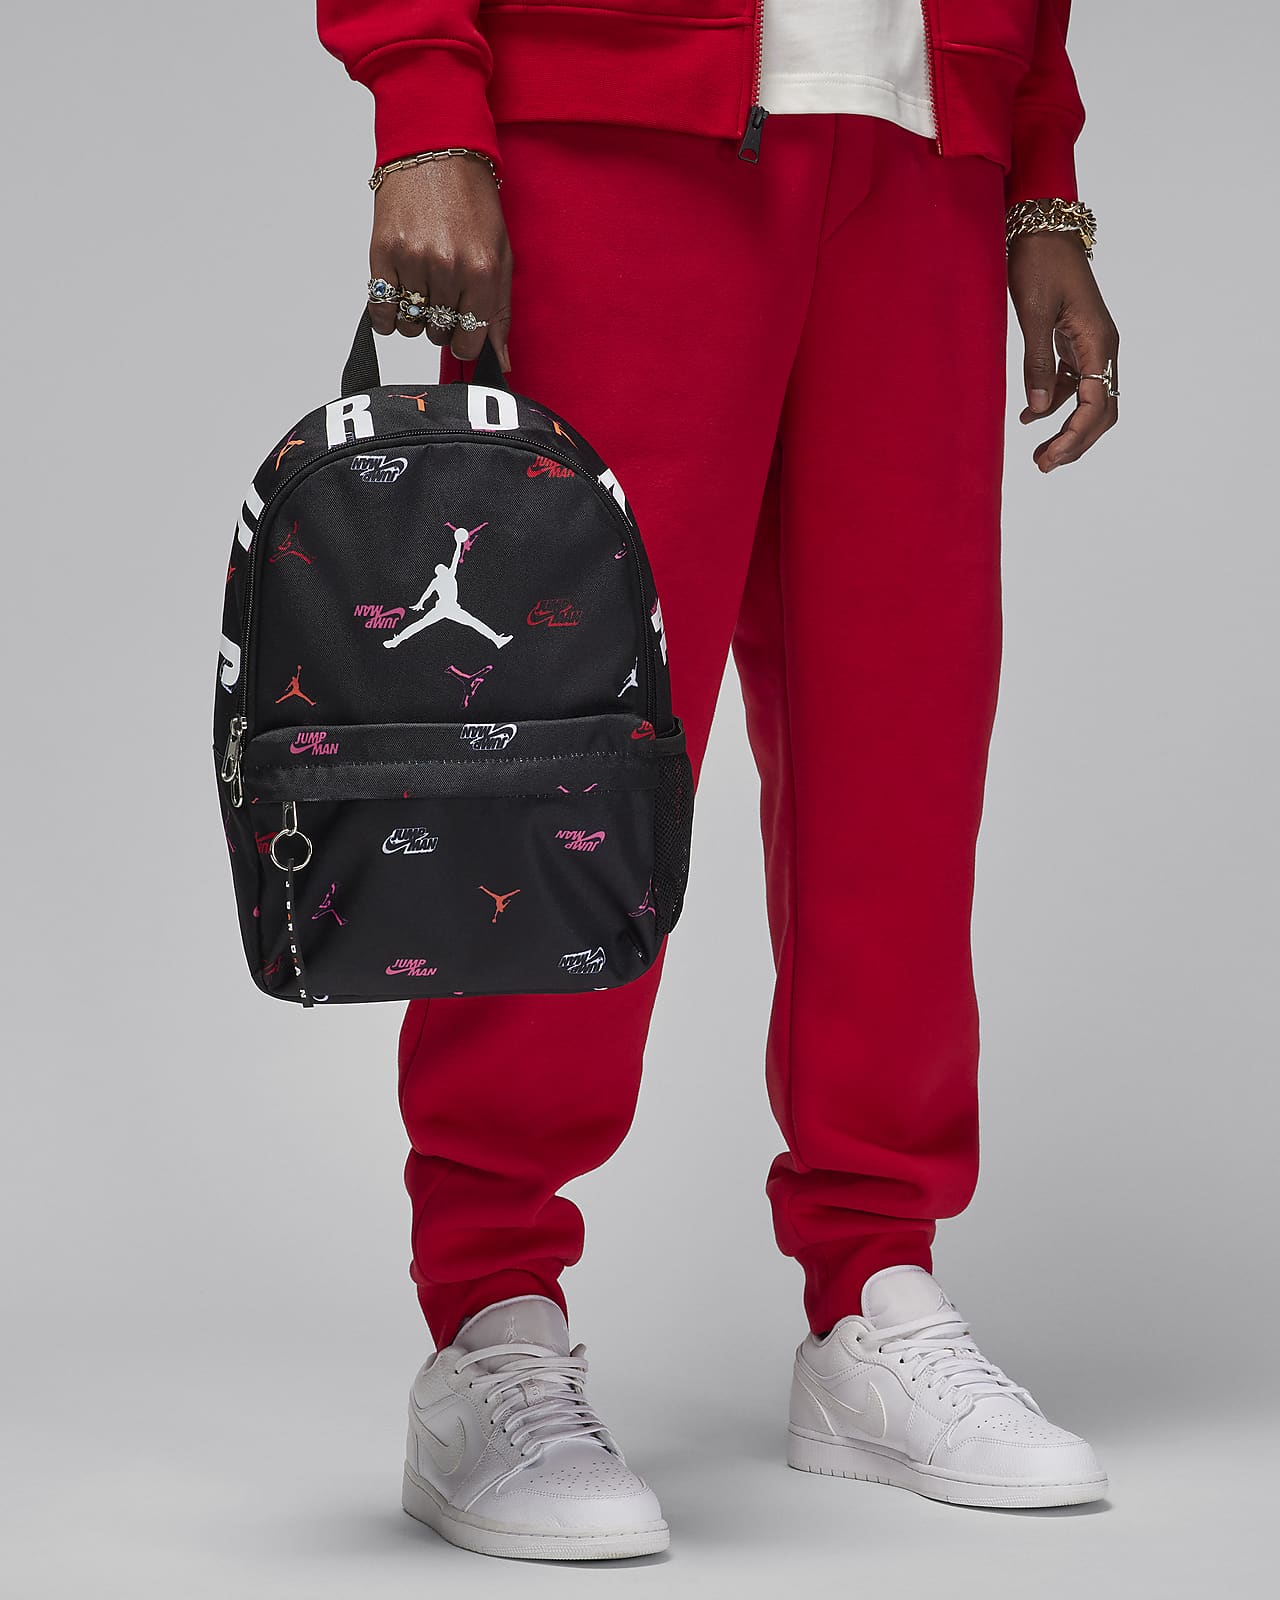 Sac à dos Jordan Air (petite taille). Nike LU